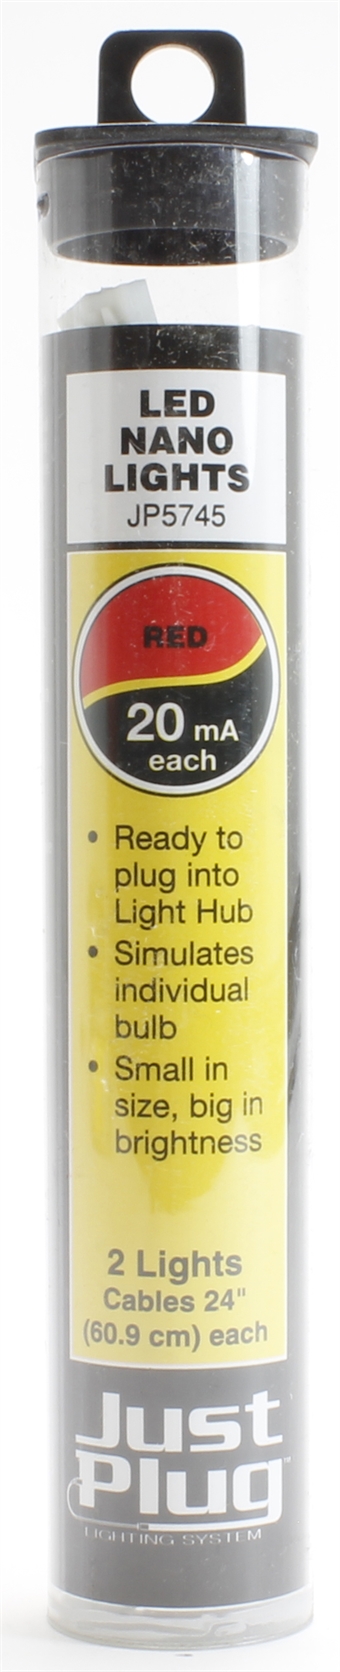 Red LED nano lights for Just Plug lighting system